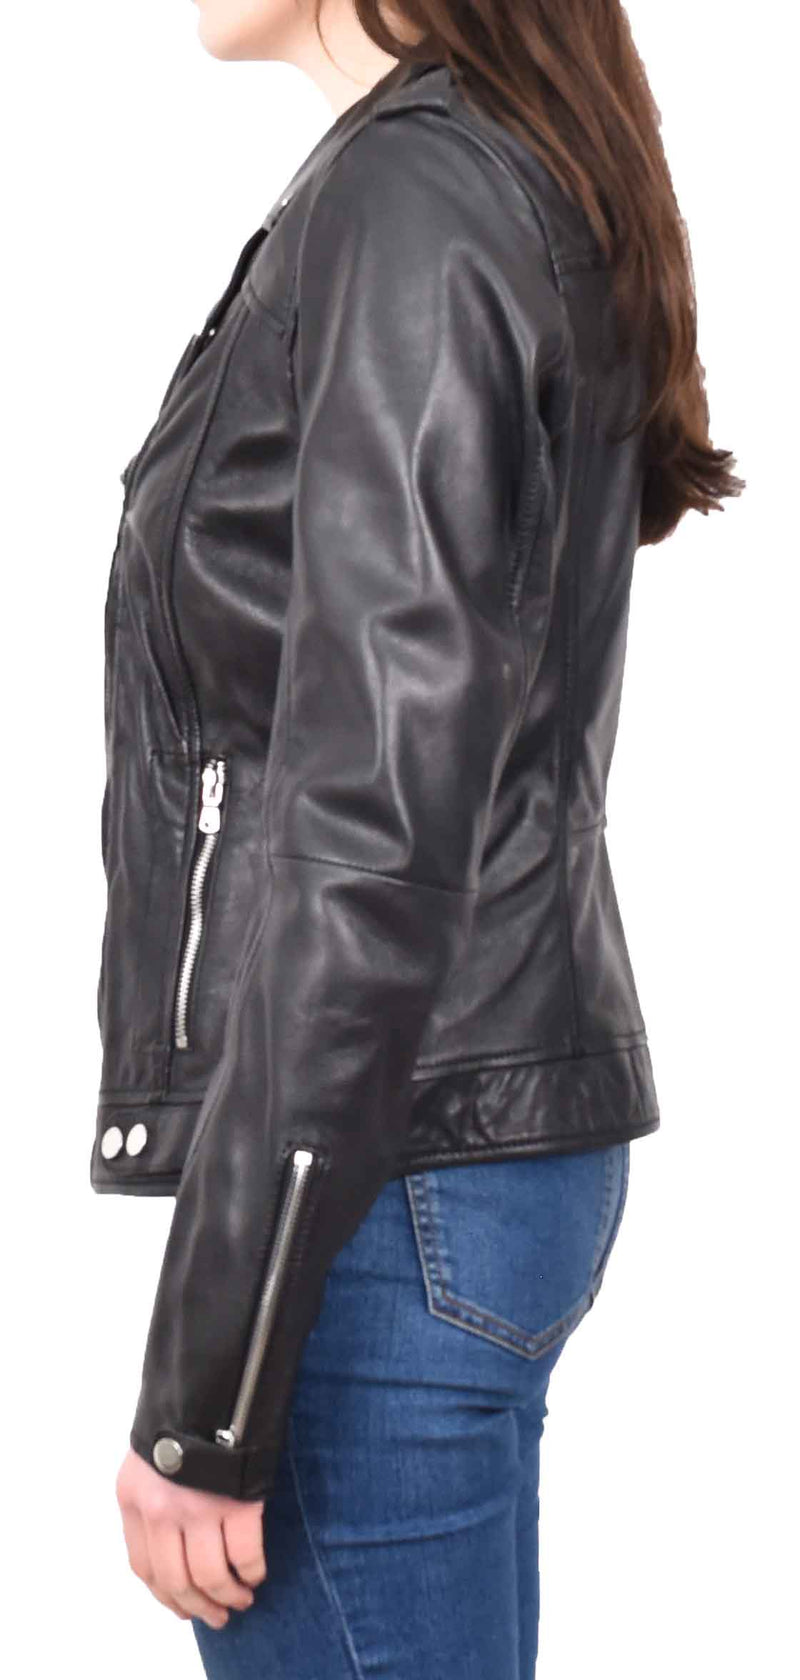 Womens Real Leather Biker Cross Zip Jacket Style Tiana Black Size 12